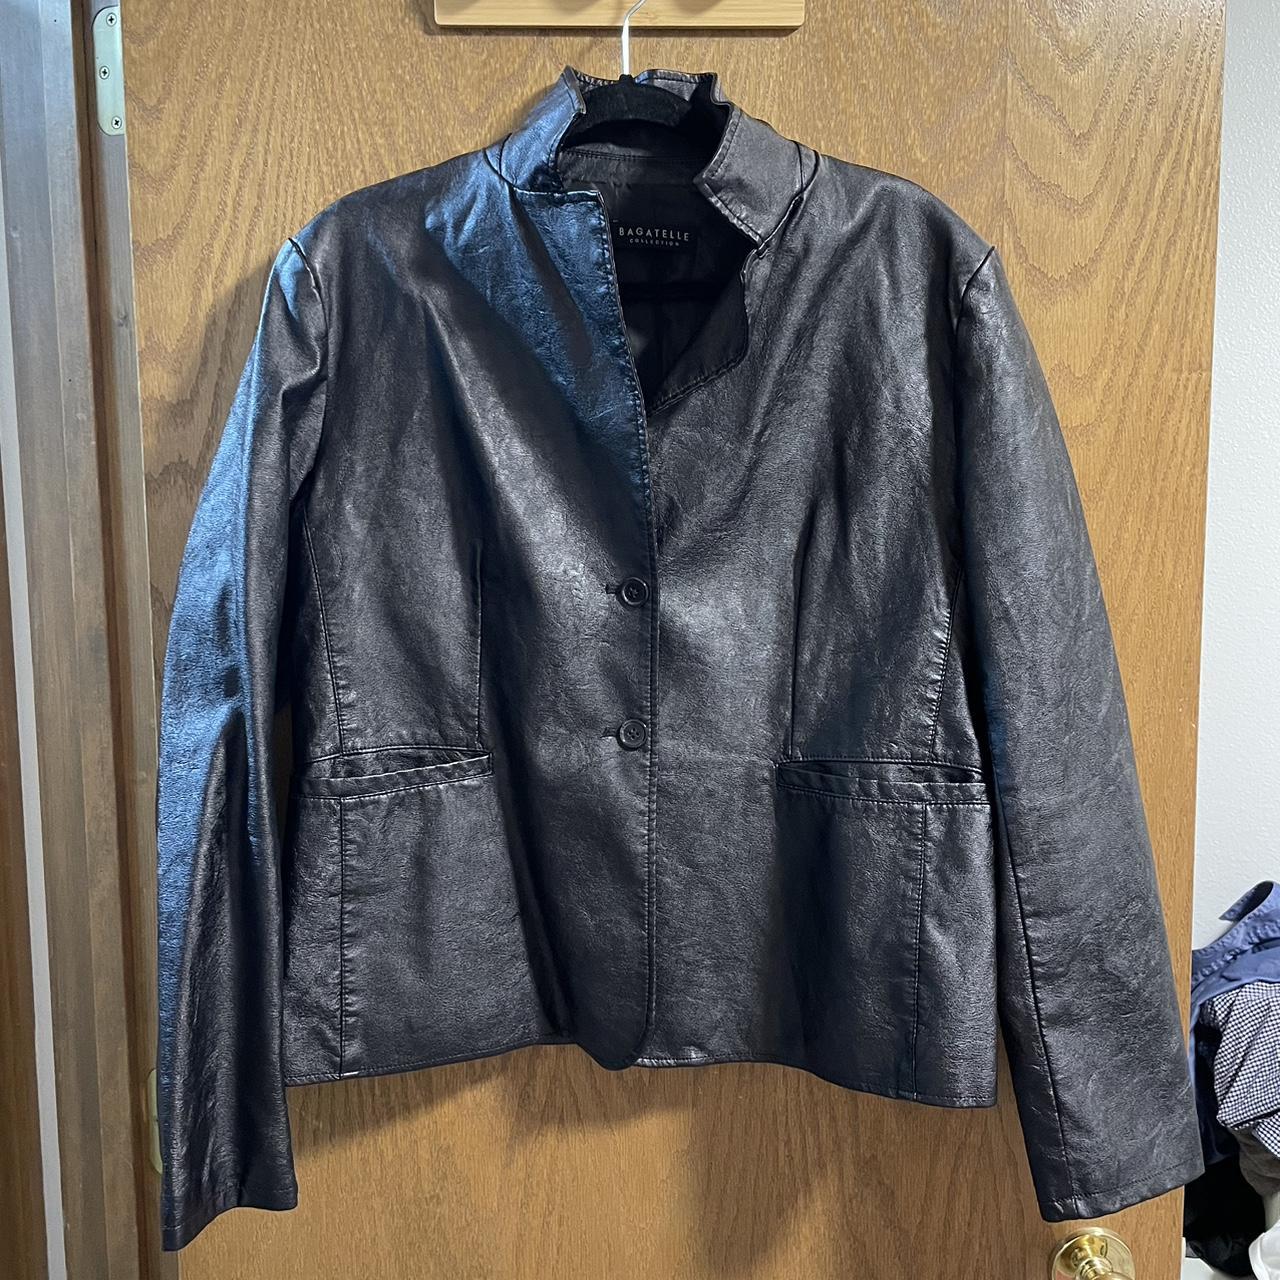 Bagatelle Leather Jacket #leatherjacket #bagatelle... - Depop